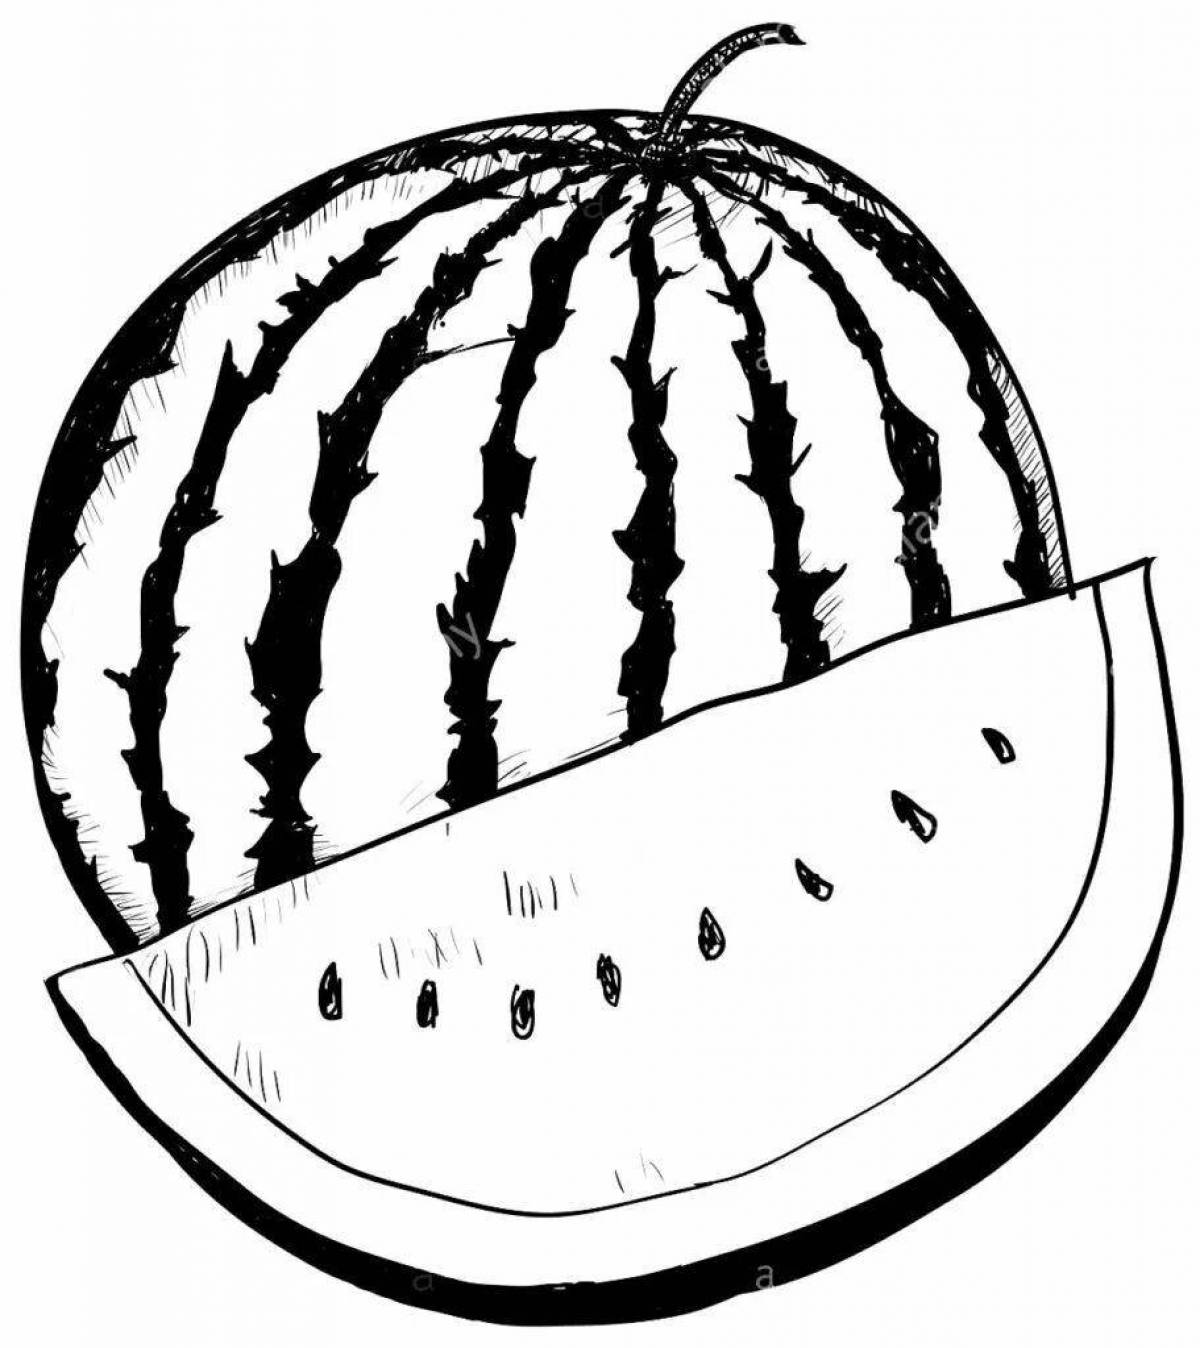 Bold watermelon drawing